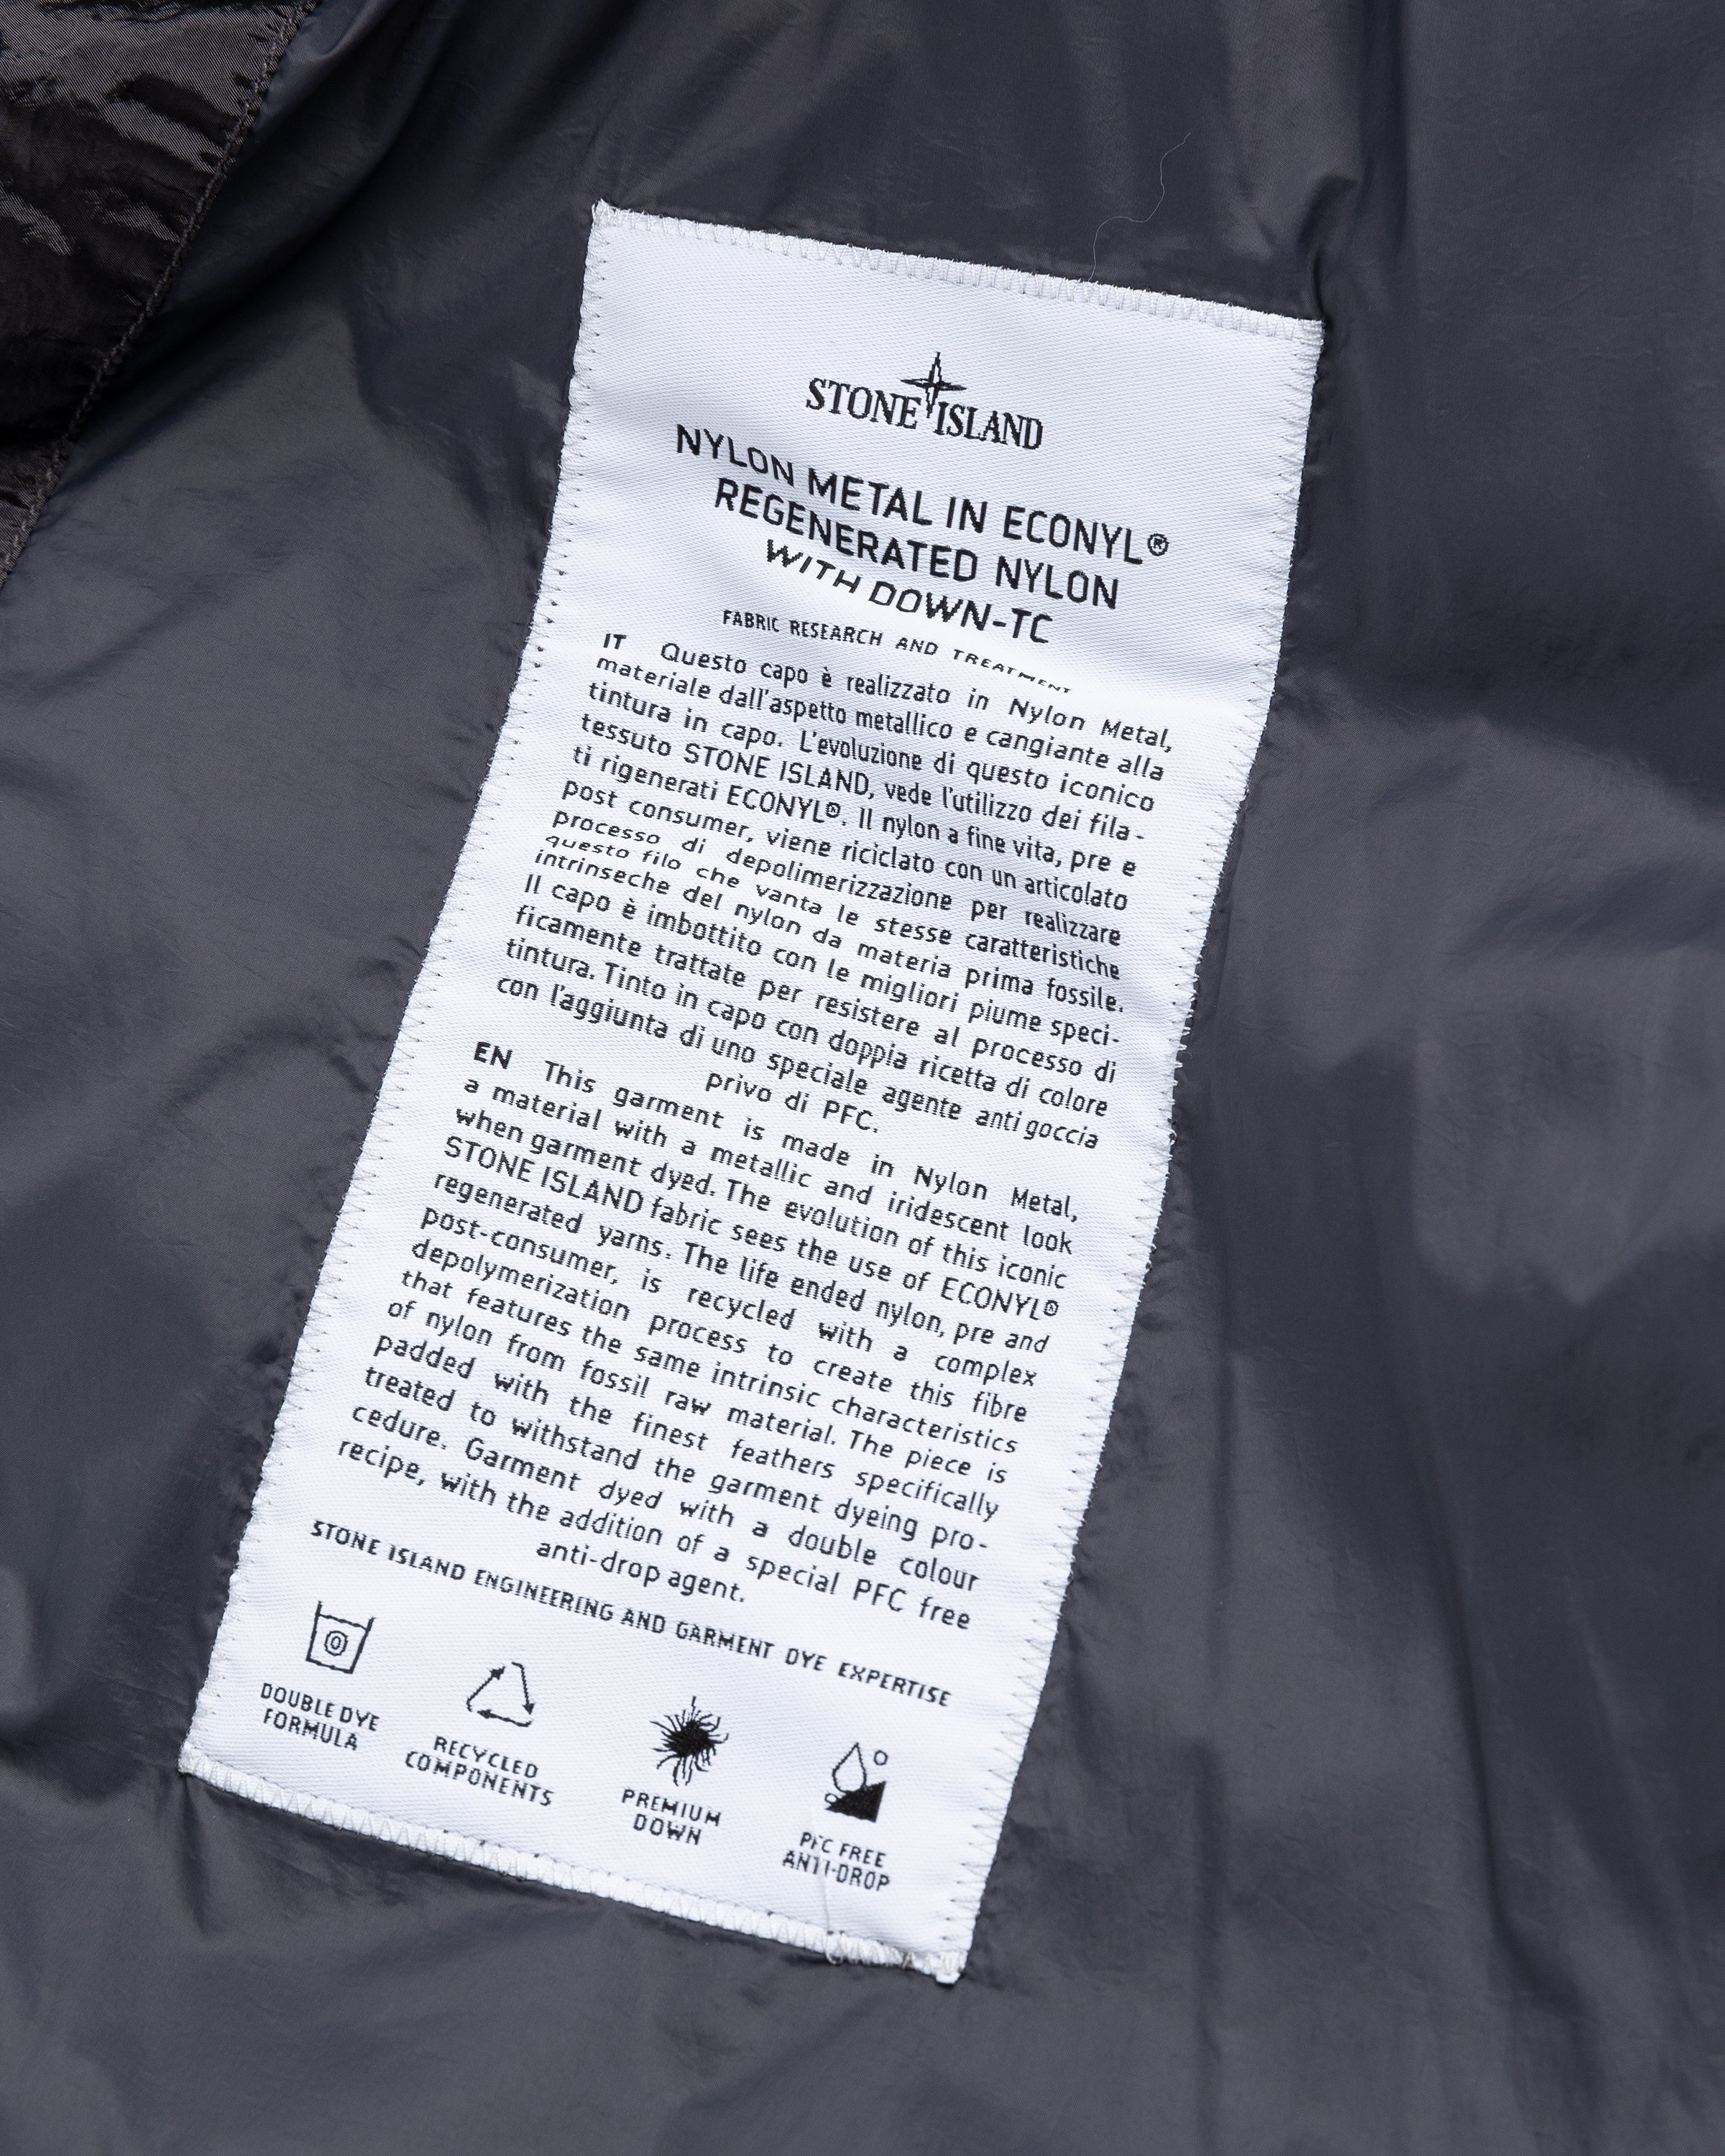 Stone Island - Nylon Metal Down Jacket Anrtacite - Clothing - Black - Image 6